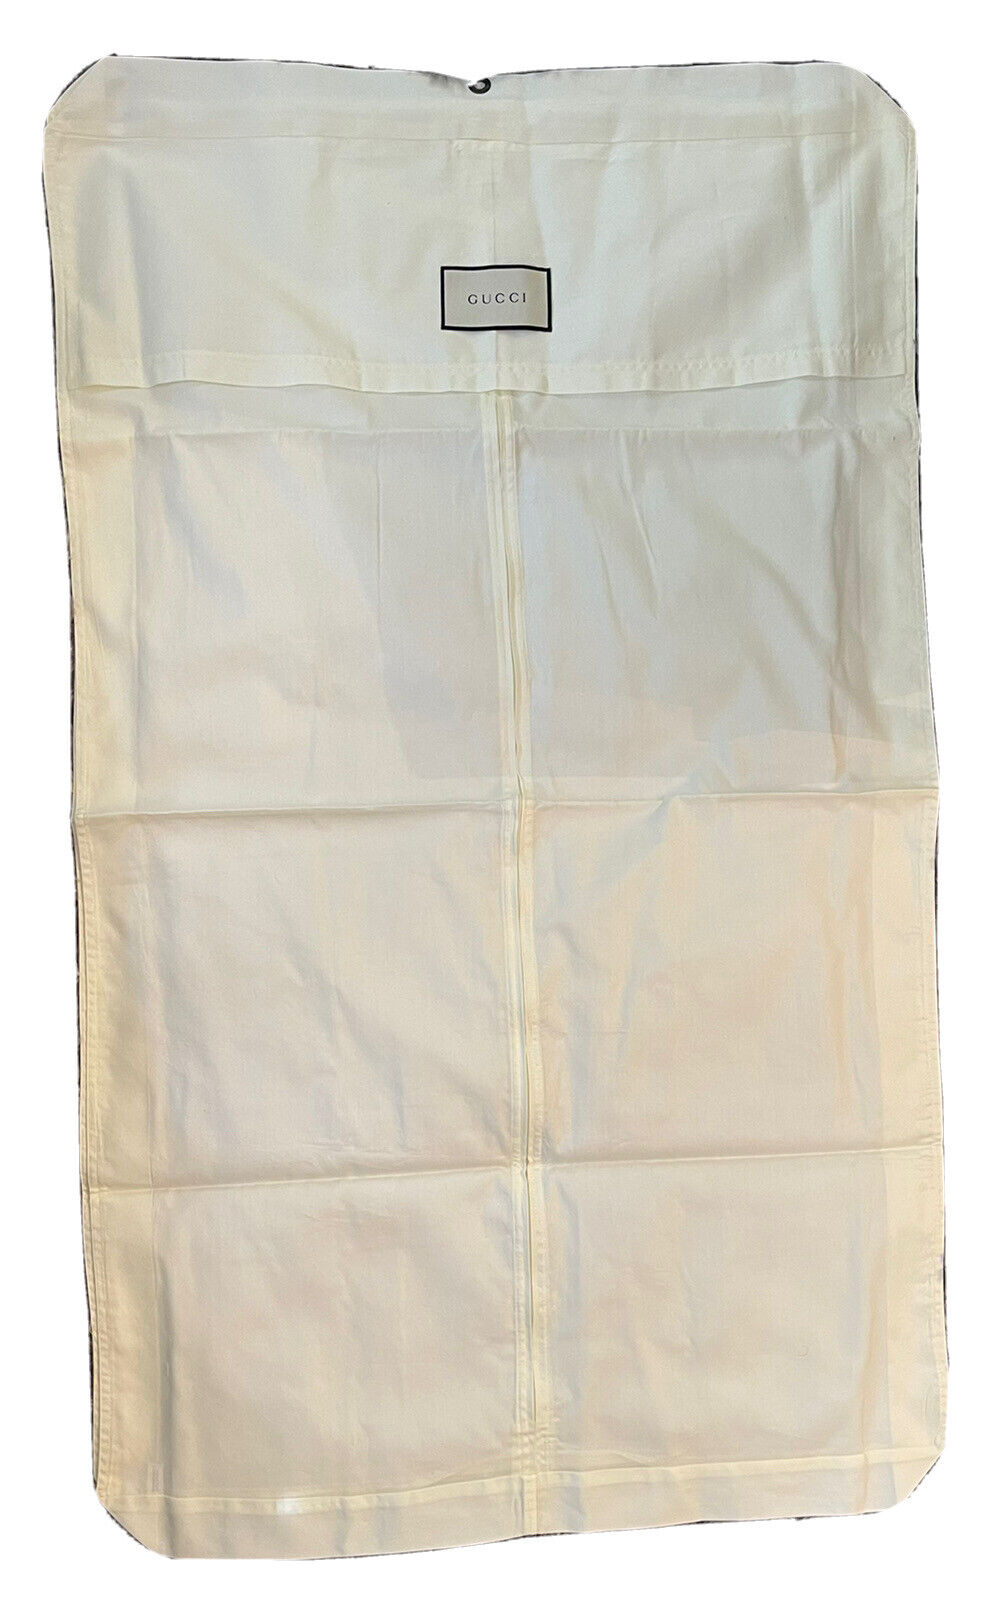 Gucci Authentic Garment Bag Dust Bag Travel Storage Cover Case New 27” X 45”